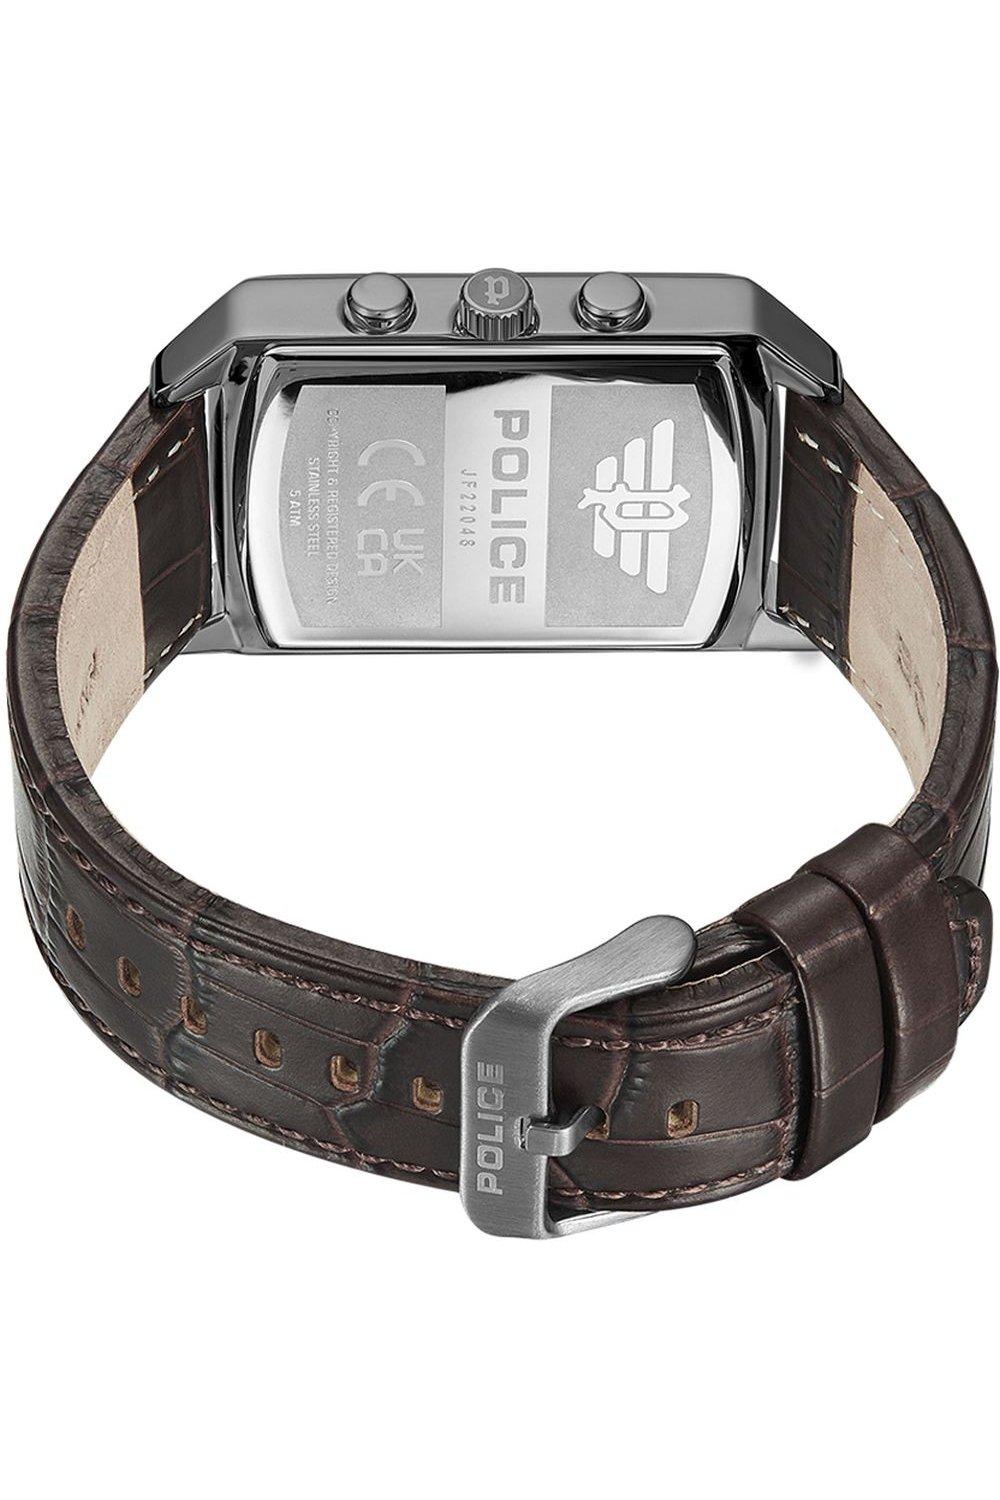 | Analogue Steel Stainless Watches Fashion Saleve Pewjf2204802 - Quartz Police | Watch